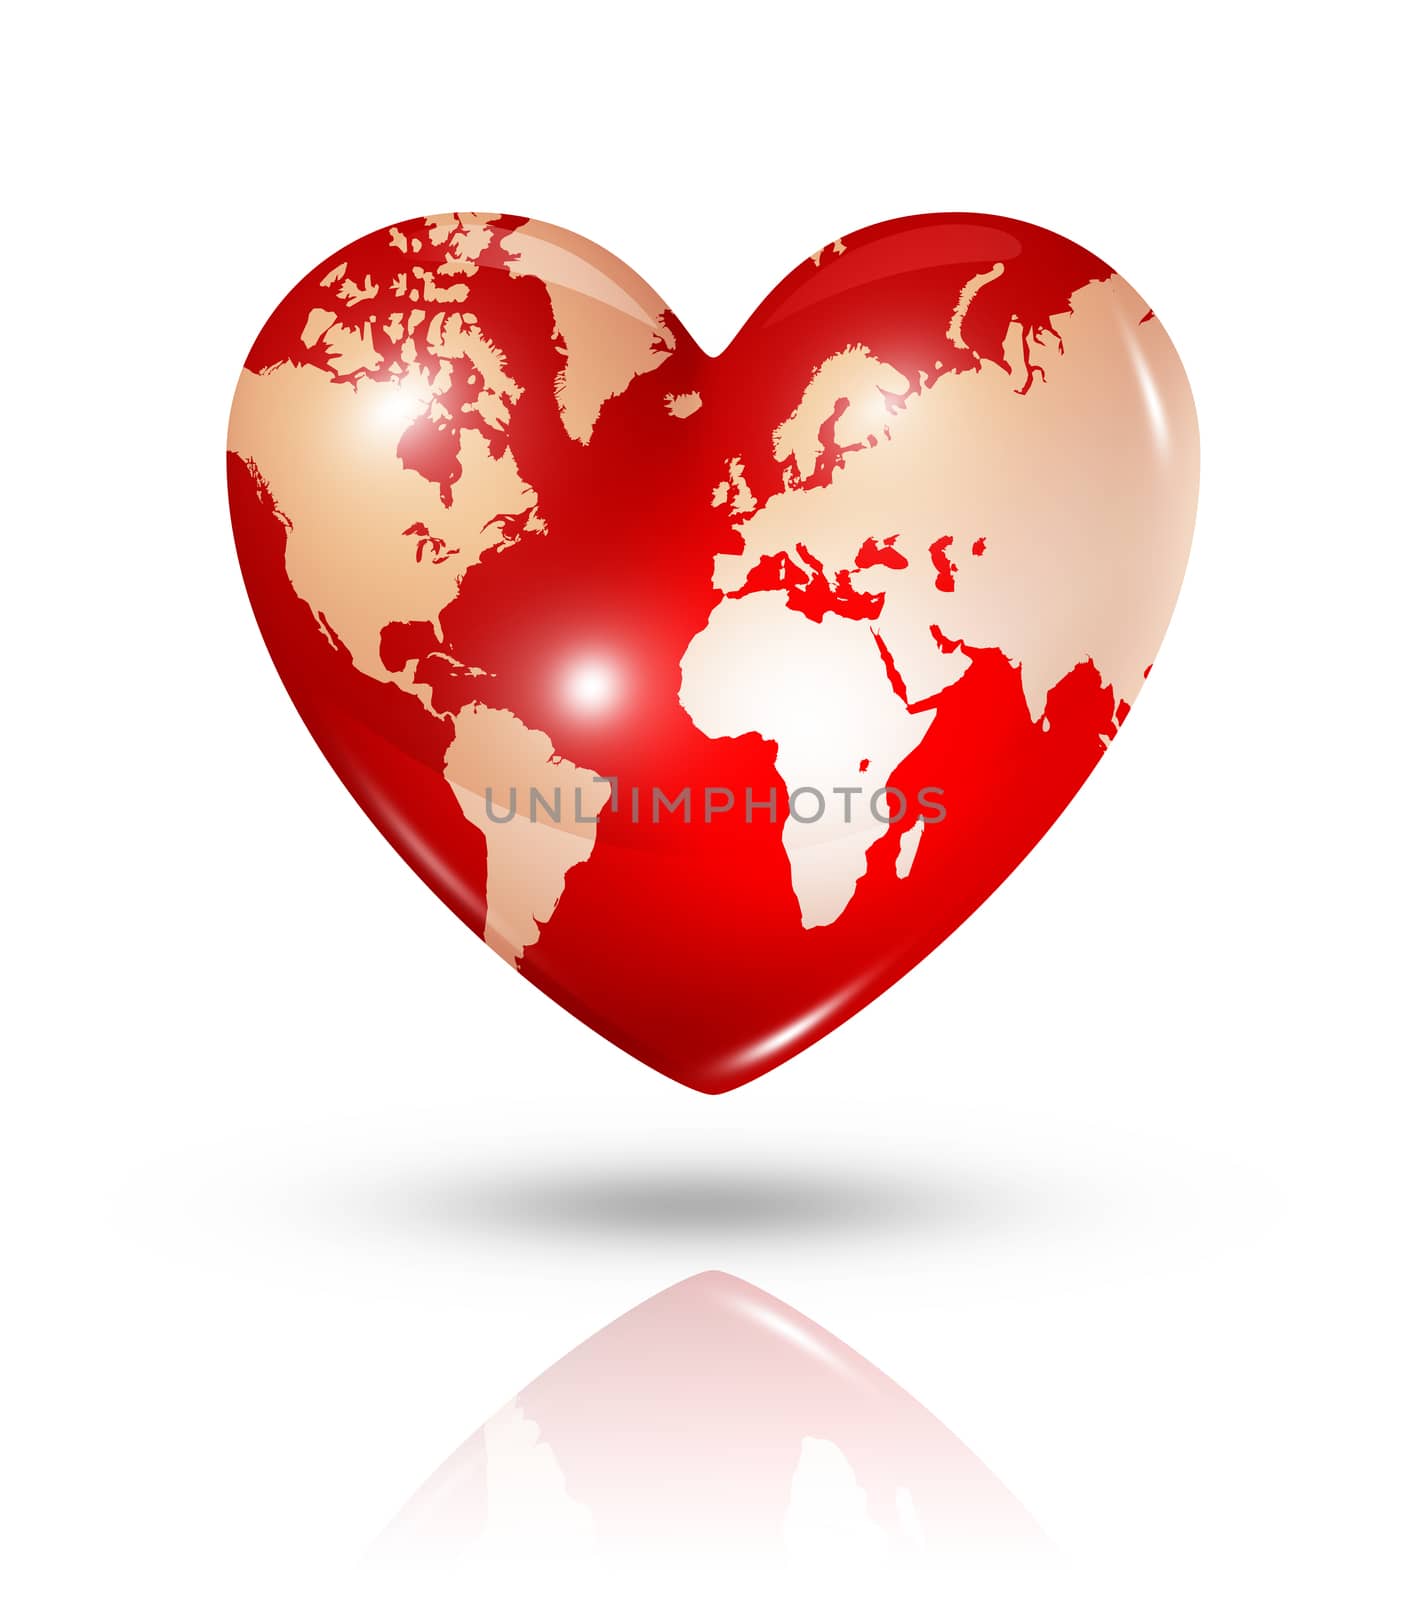 Love earth, heart icon by daboost